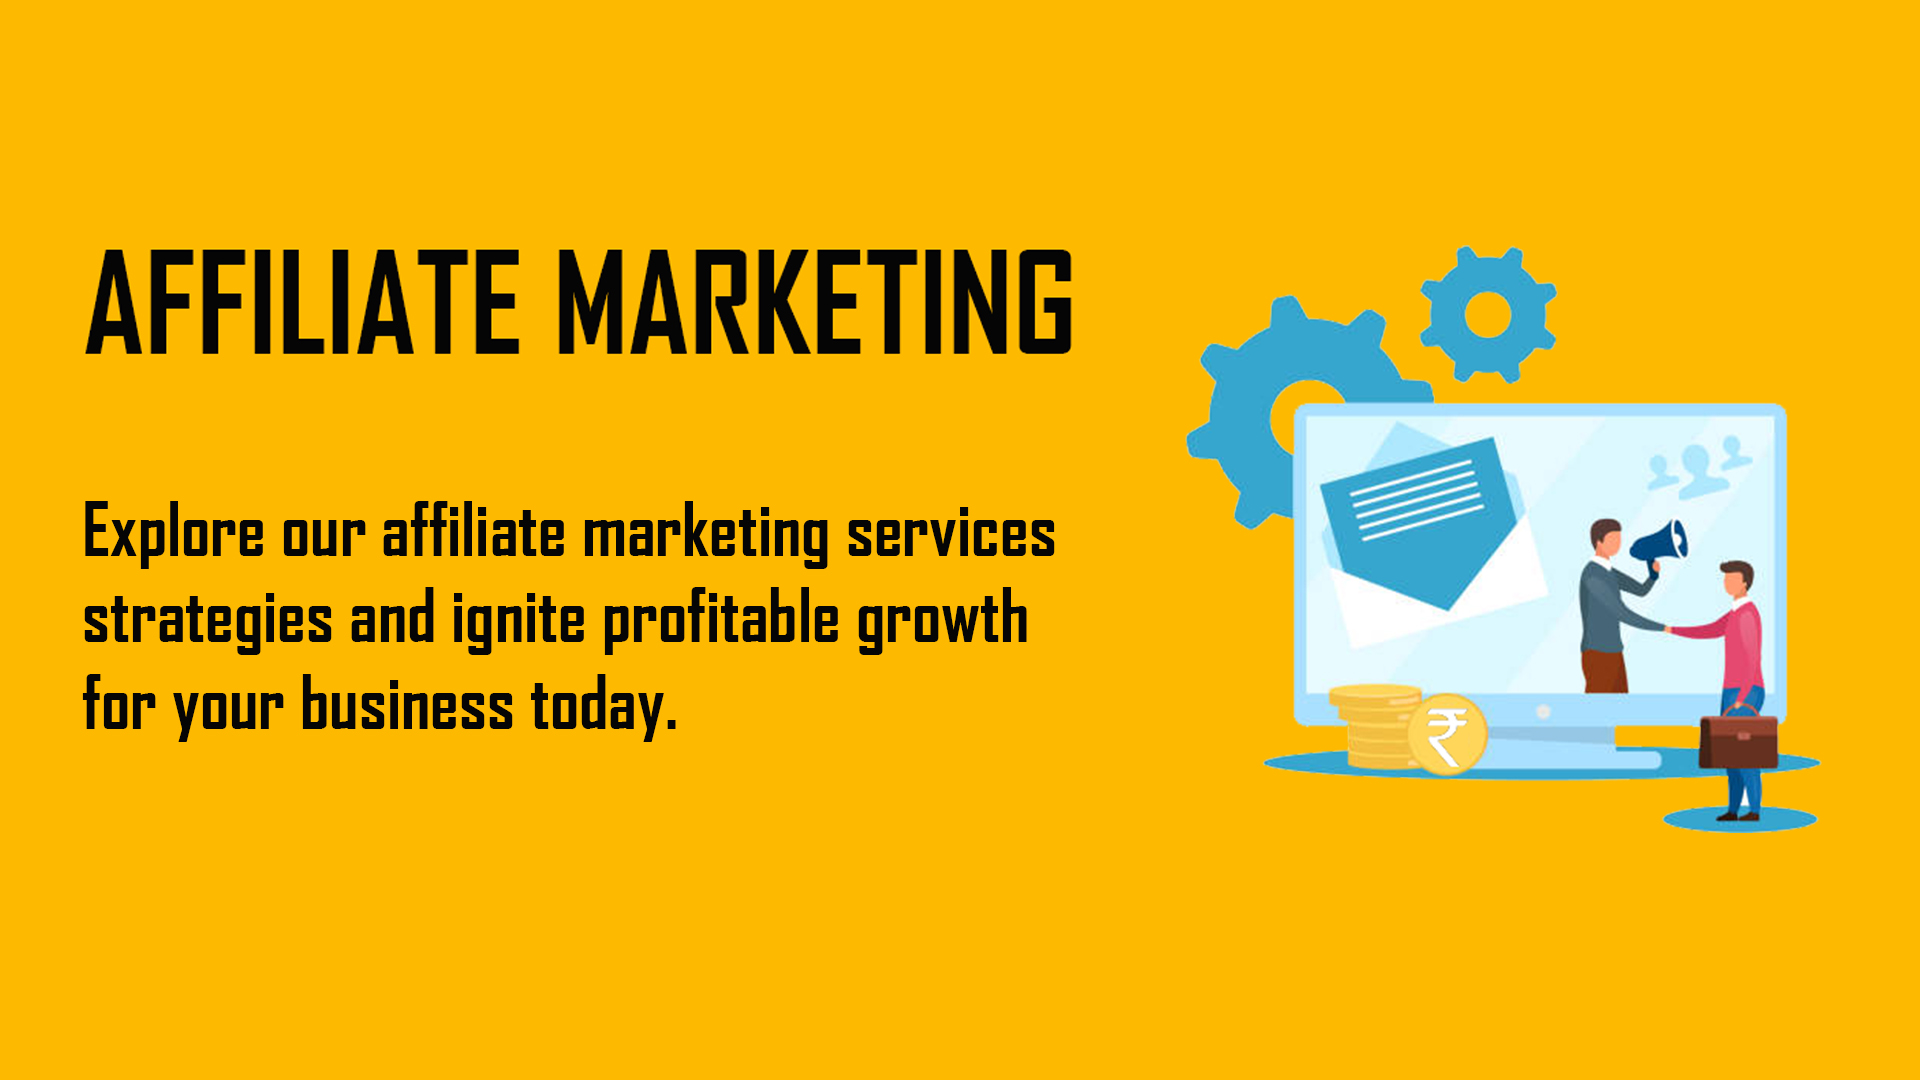 Affiliate Marketing, DIGITAL MARKETING - SEO, PPC, SEM, Social Media Marketing